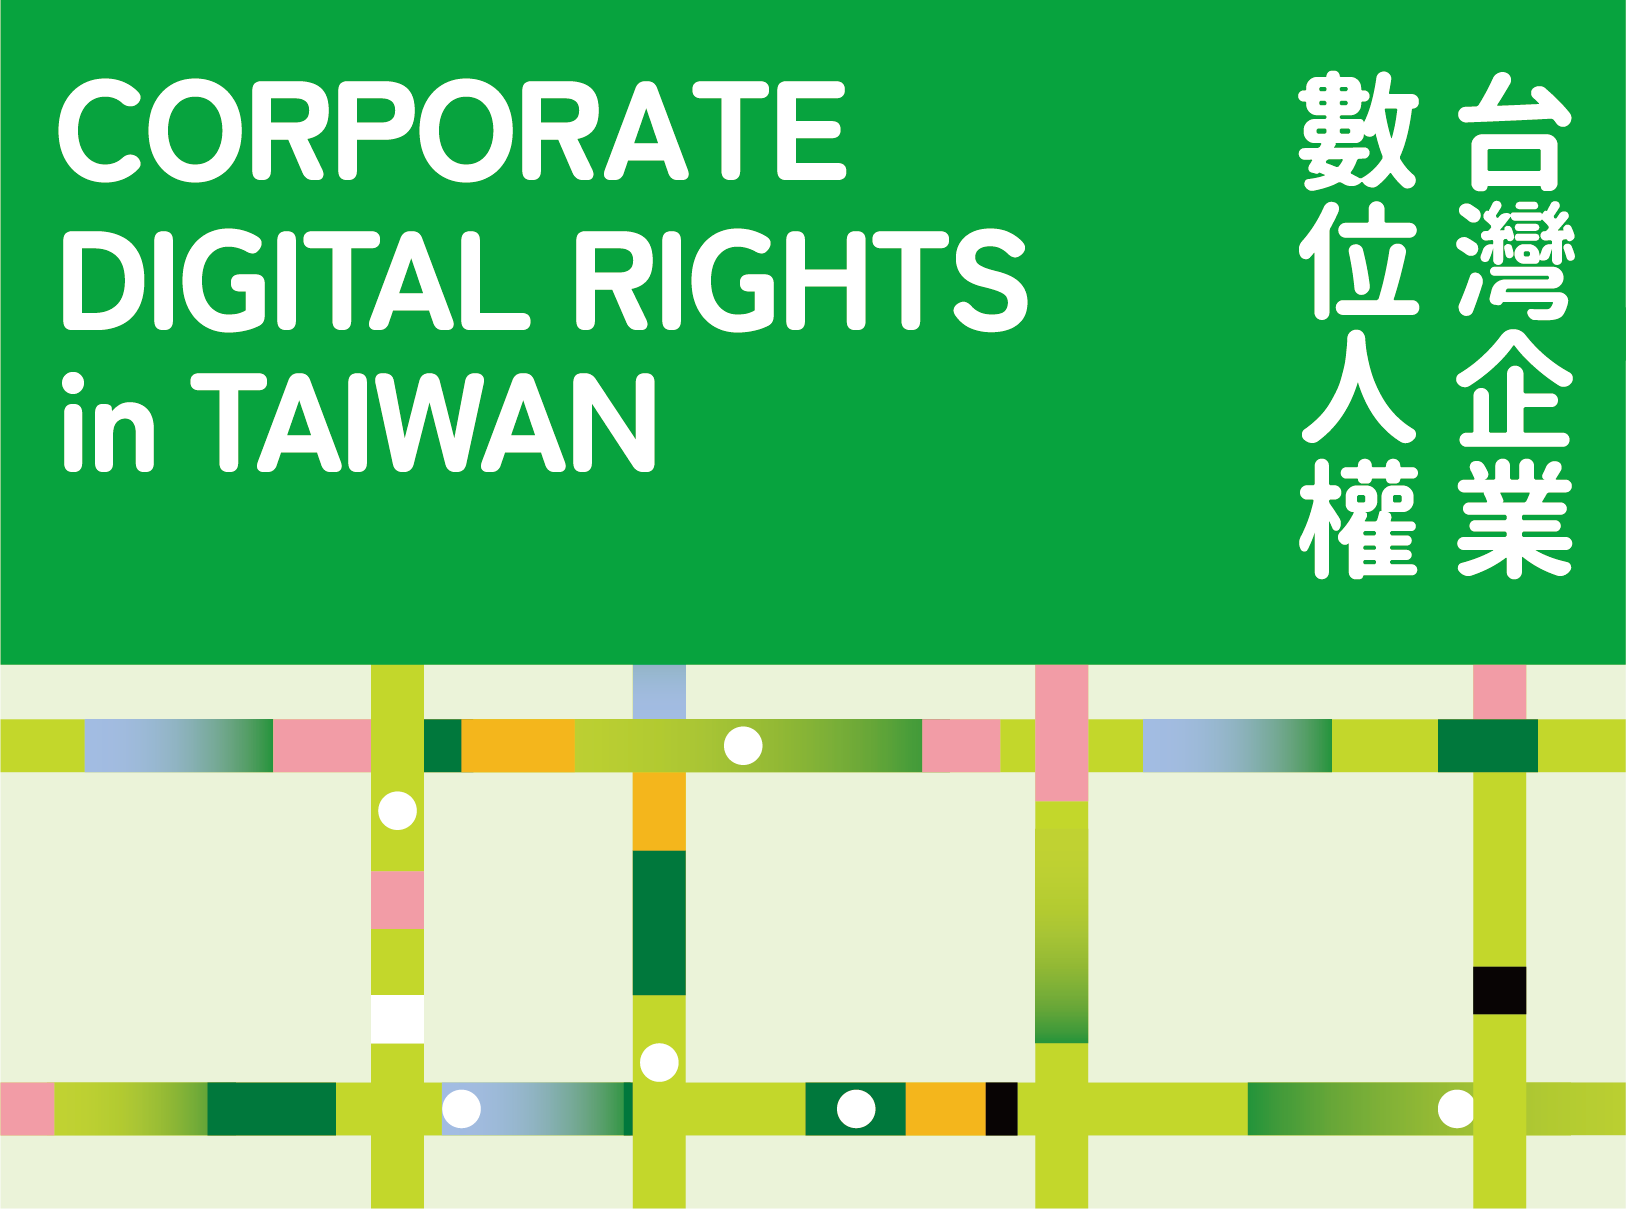 Visual identity image for '企業數位人權'